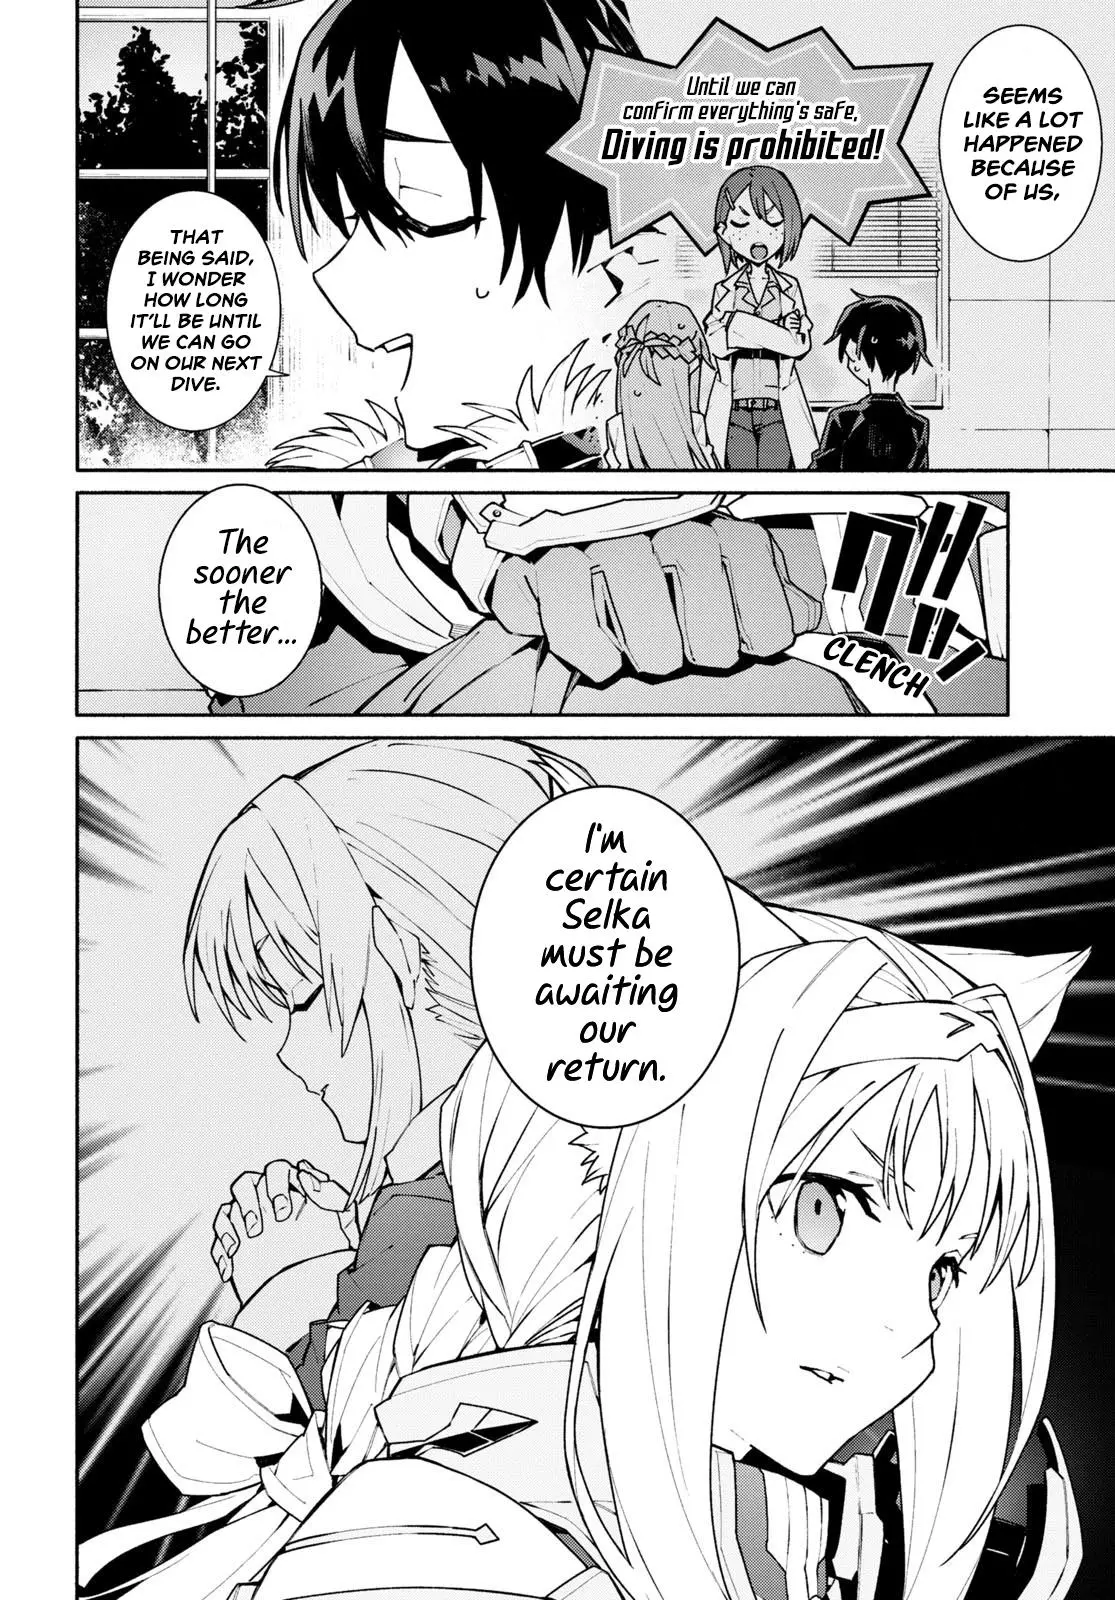 Sword Art Online Unital Ring Vol.1 Ch.0 Page 28 - Mangago